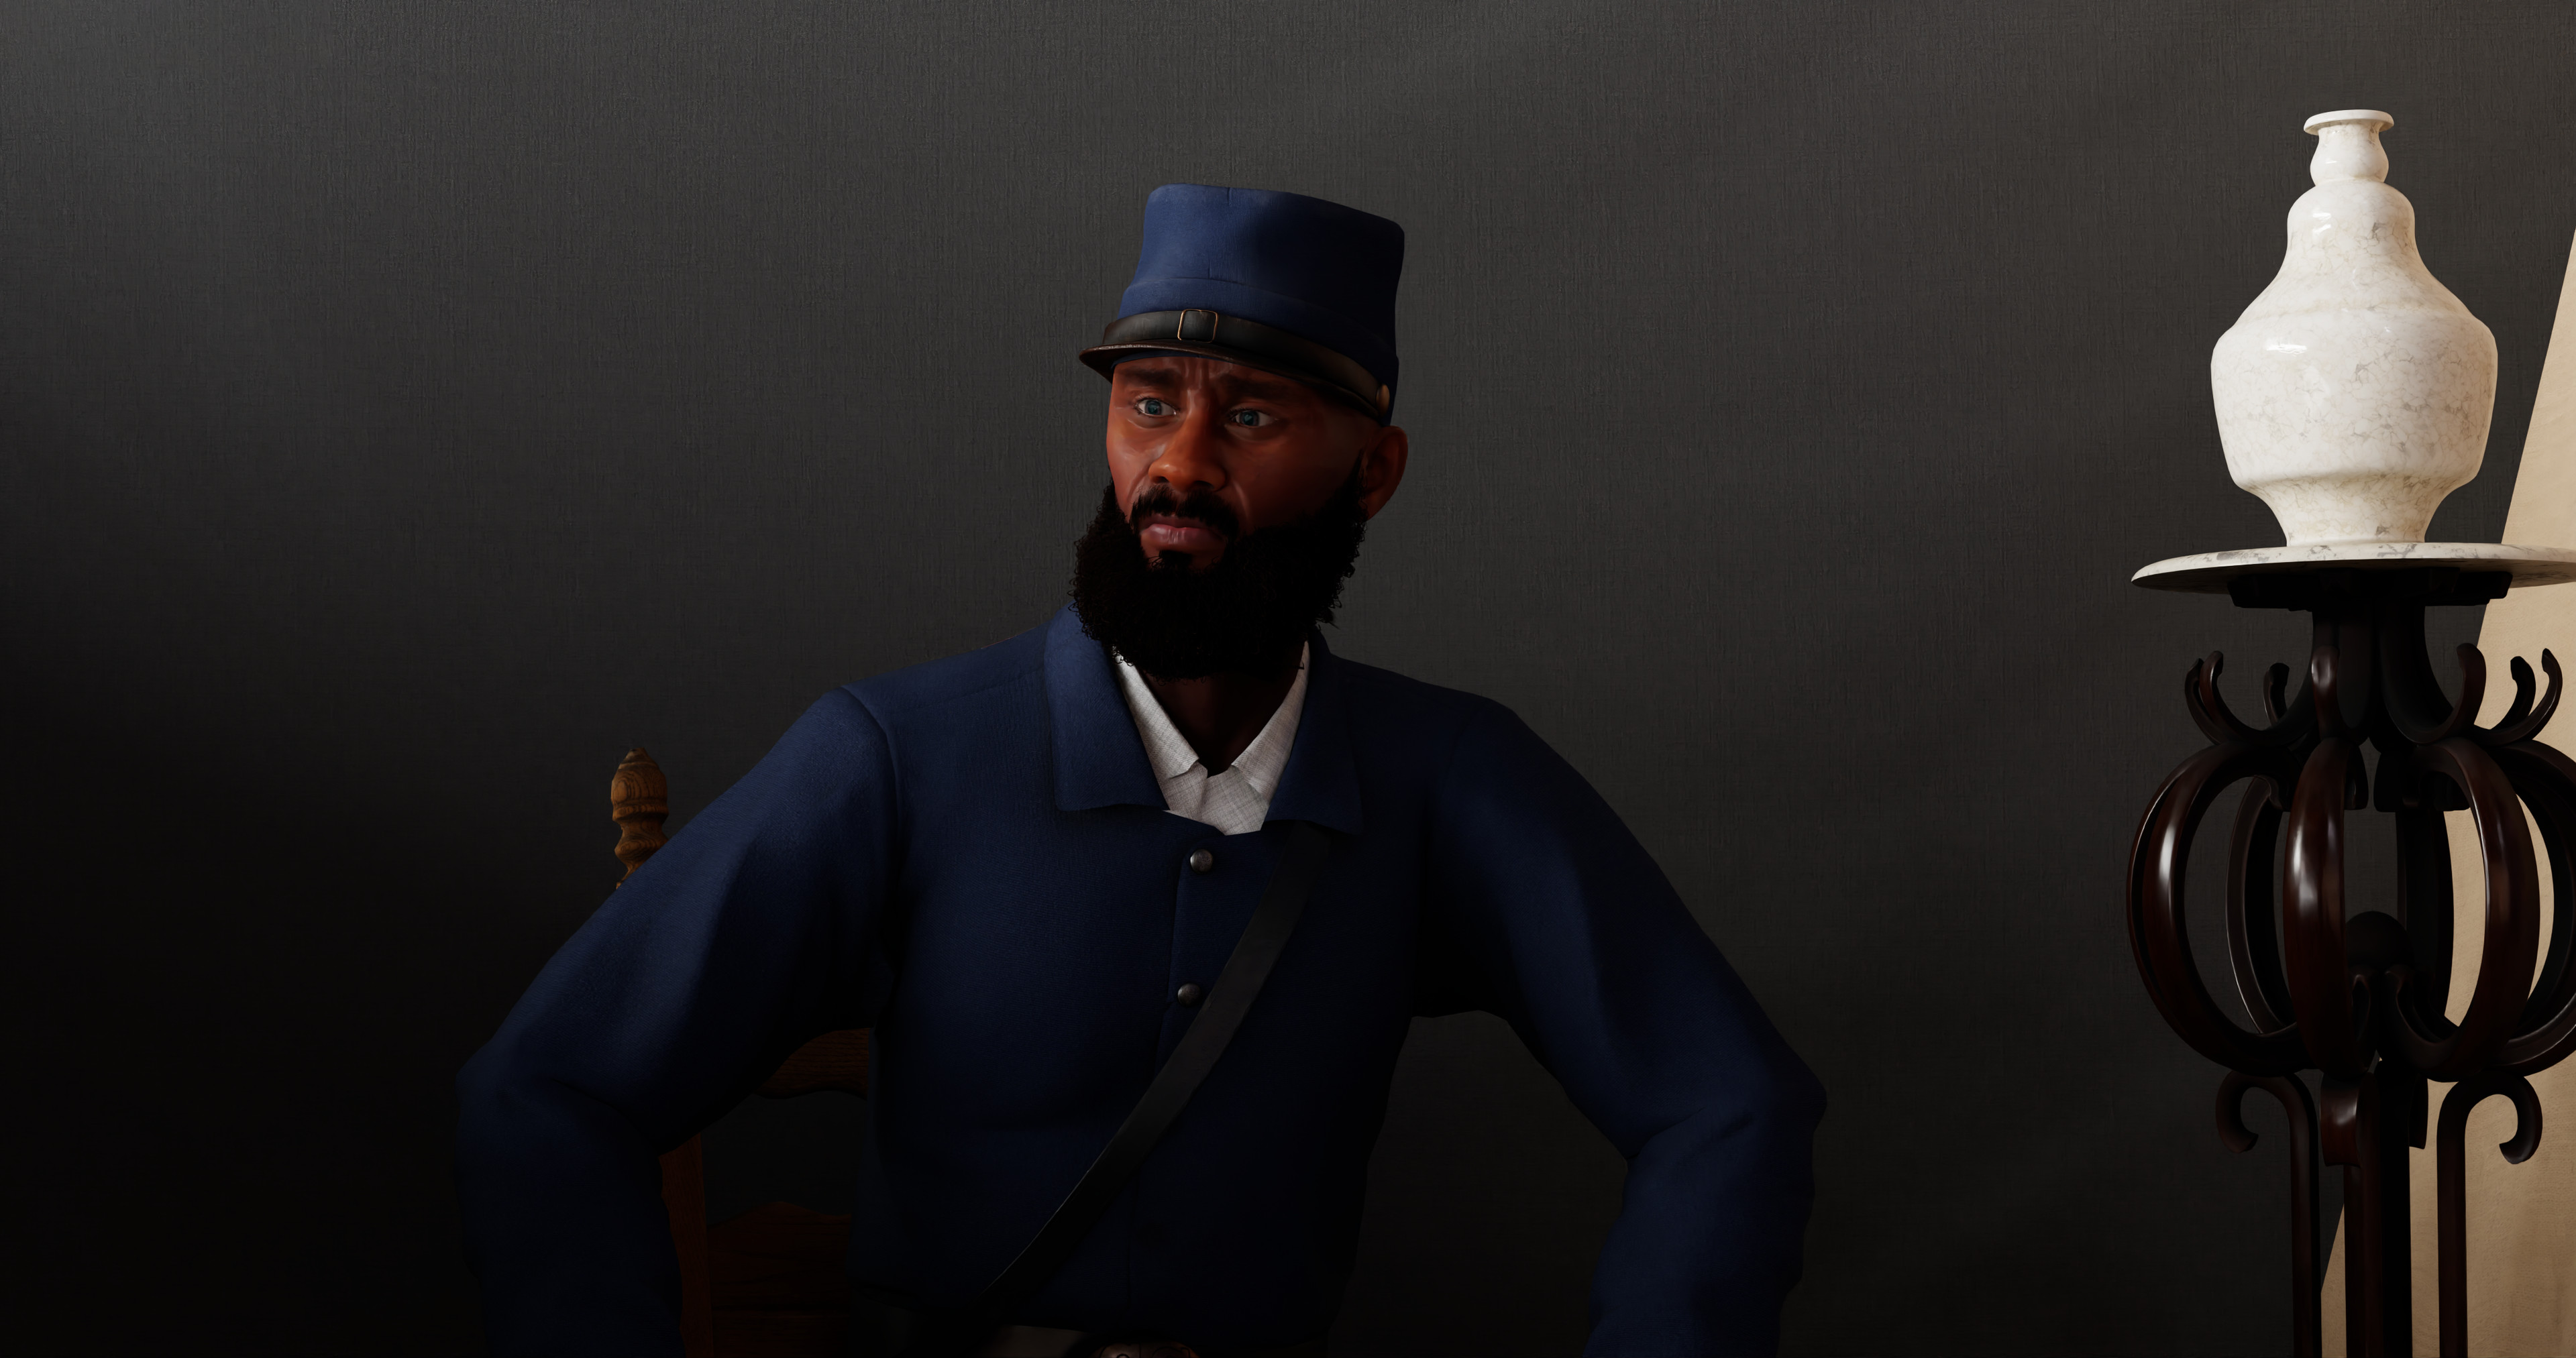 James the Union soldier - character art and promotional render by José Tijerín https://tijerinart.artstation.com/